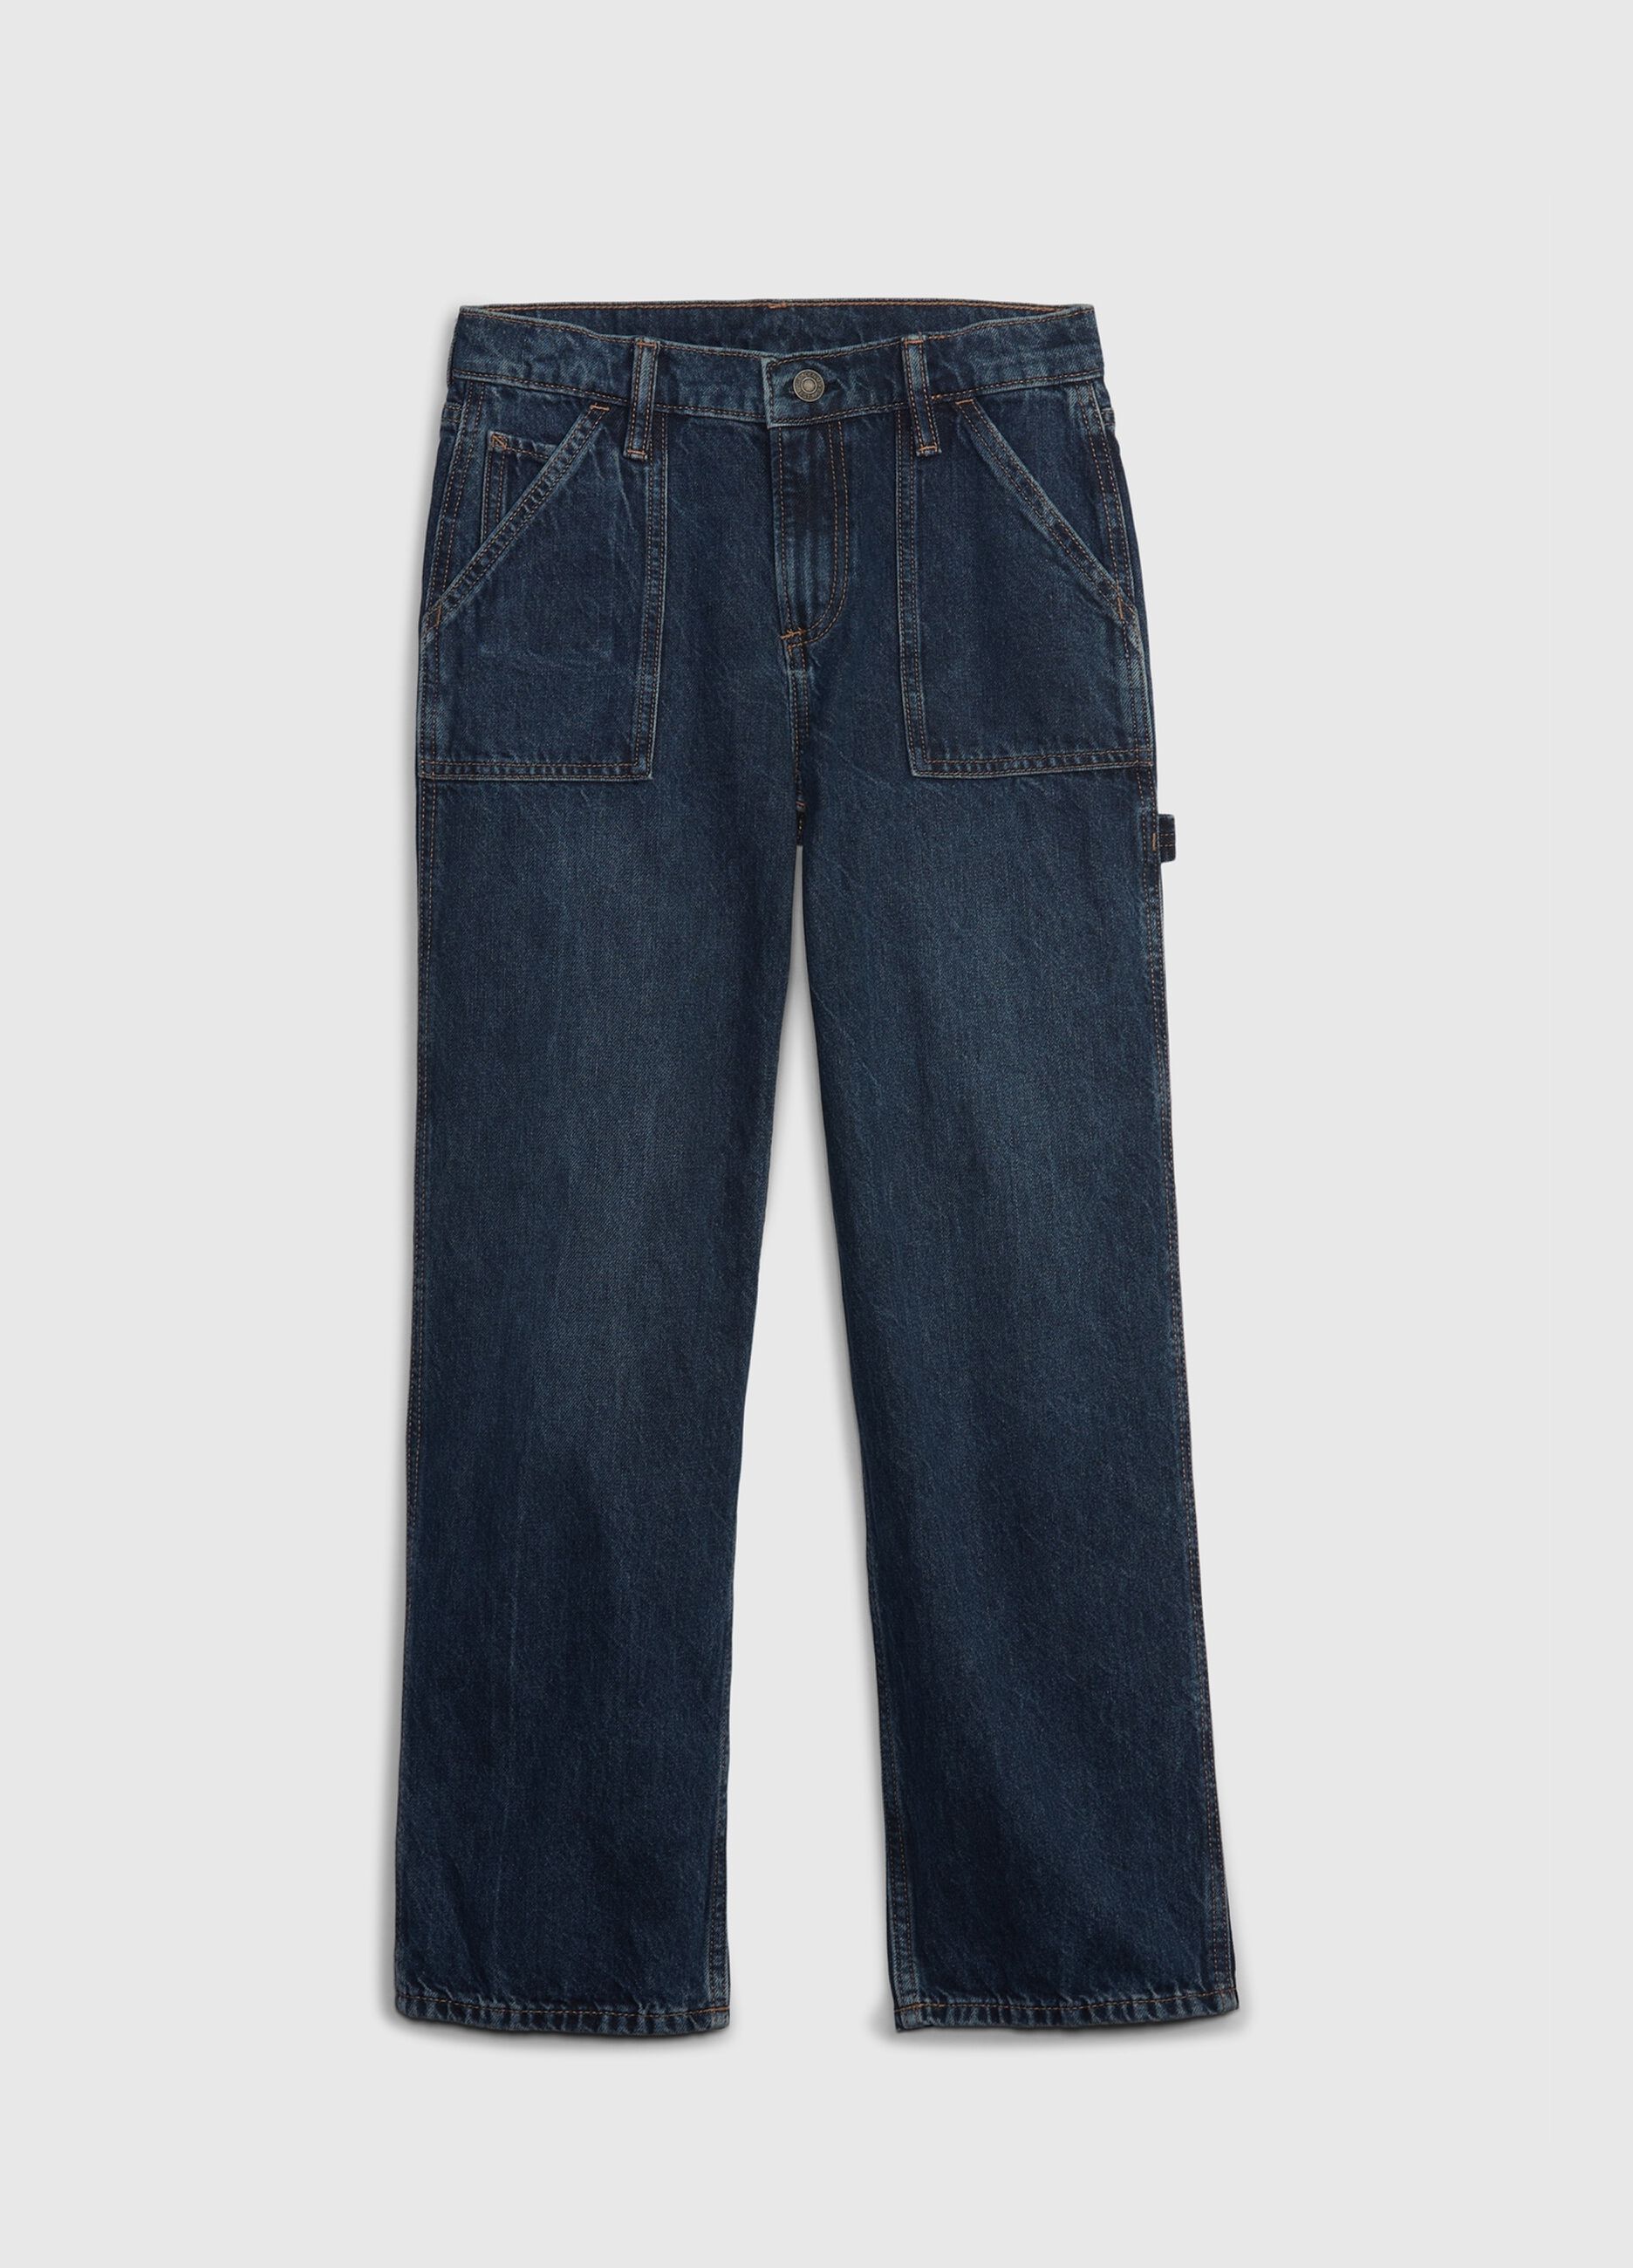 Carpenter jeans in cotton